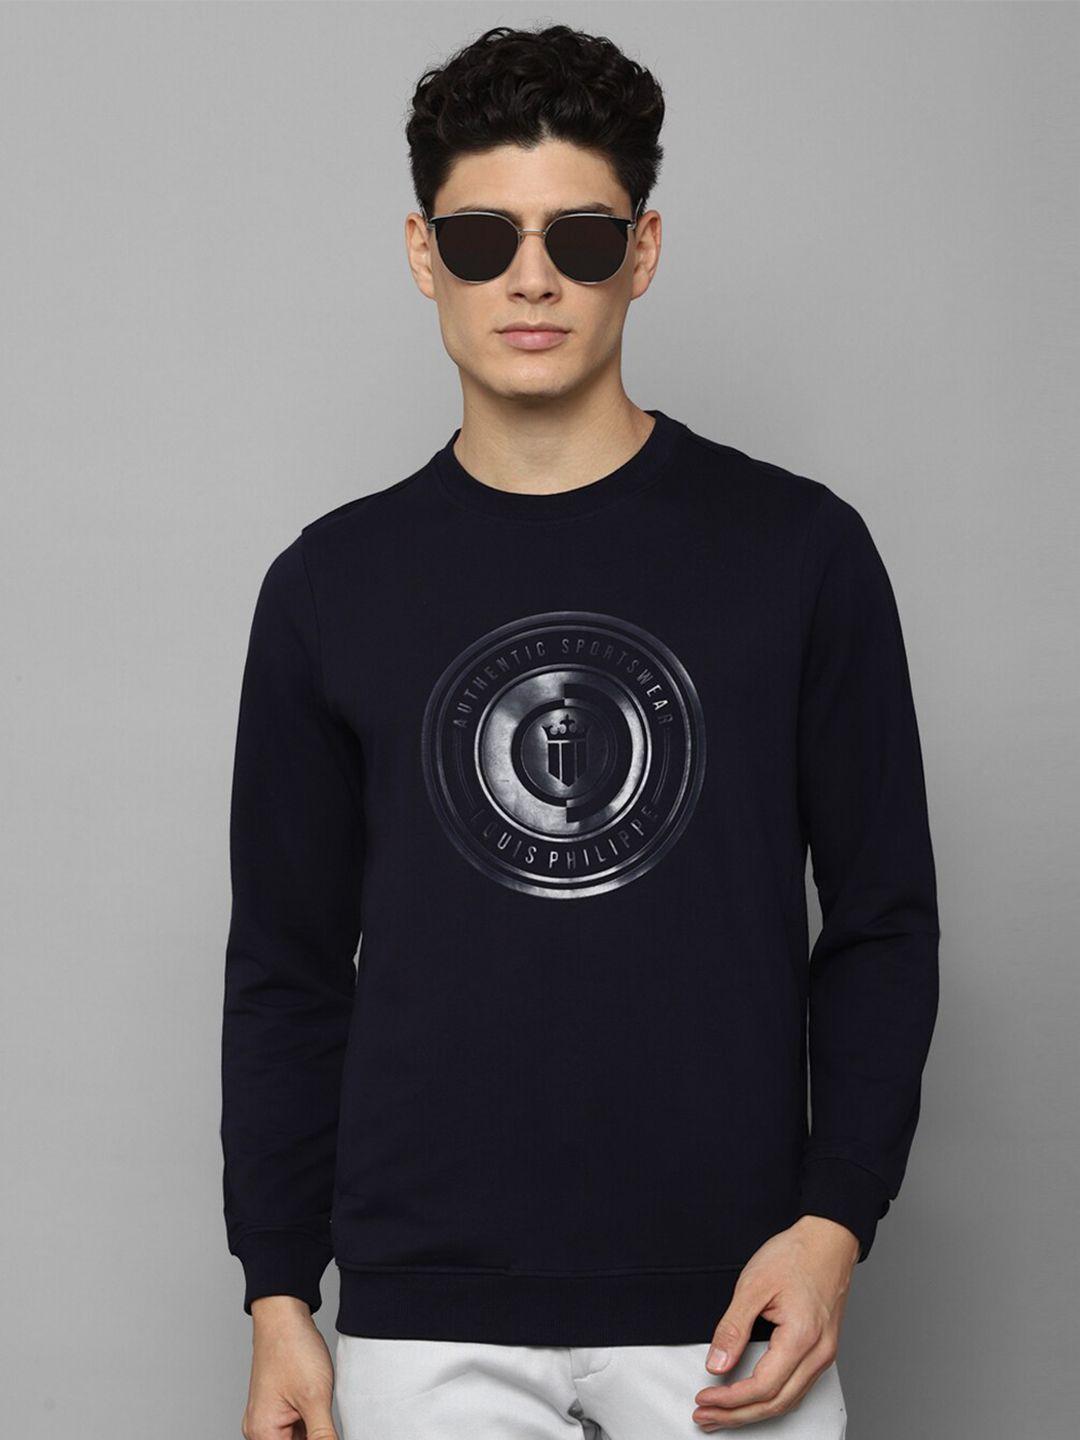 louis-philippe-sport-men-navy-blue-printed-cotton-sweatshirt